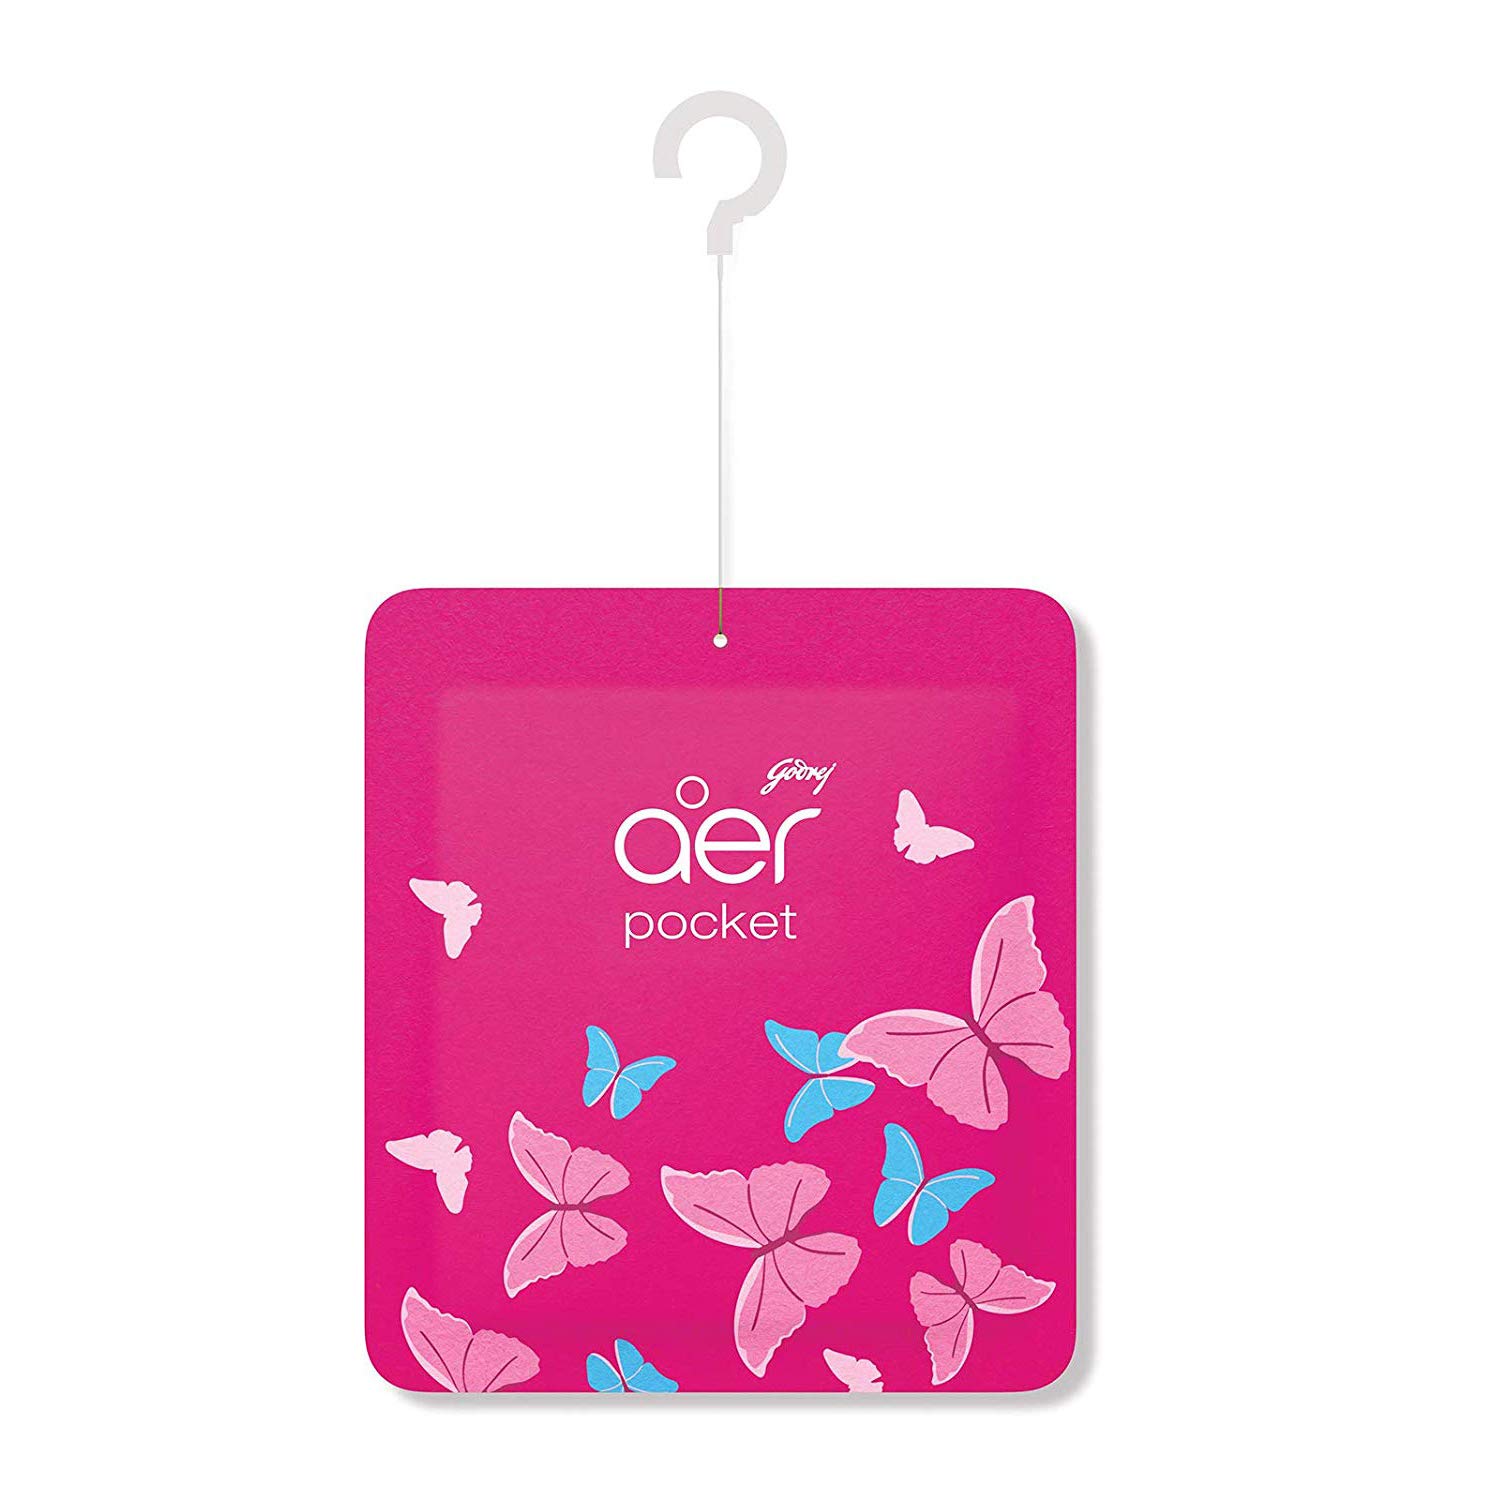 Godrej aer pocket, Bathroom Air Fragrance - Petal Crush Pink (10g)